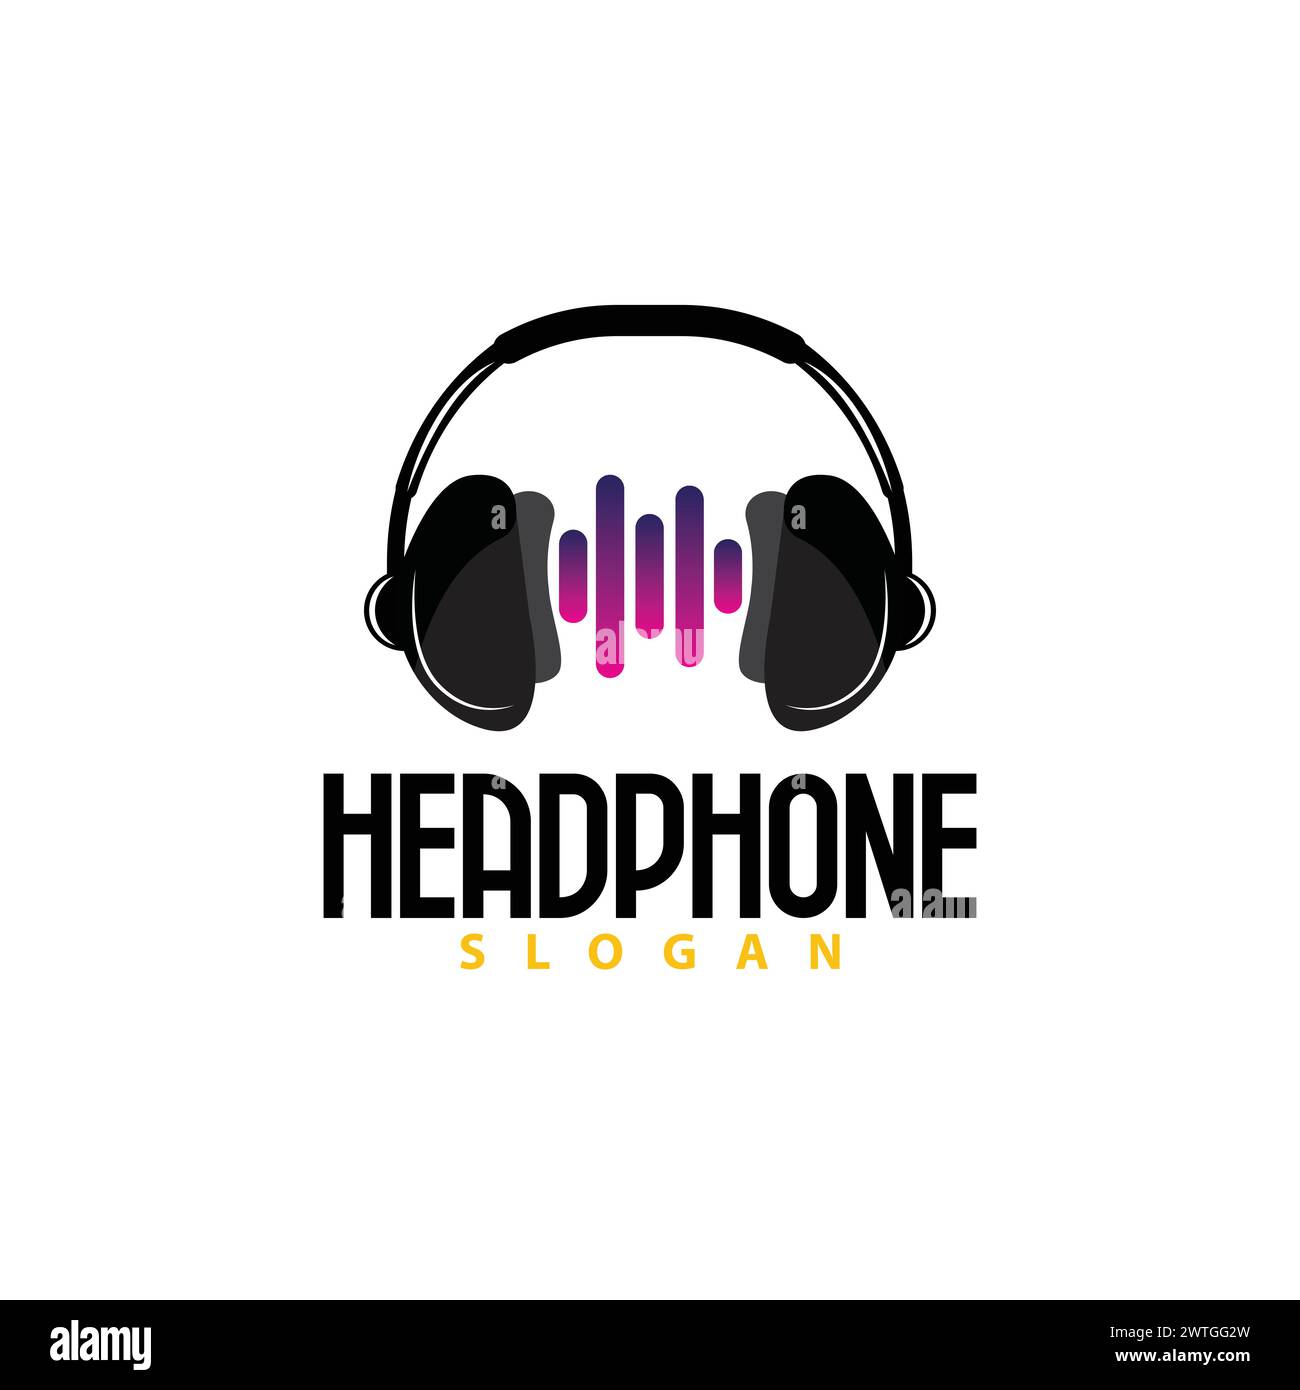 Headphone Logo, Music Listening Device Vector, Elegant Minimalist Simple Design, Silhouette Icon Illustration Stock Vector